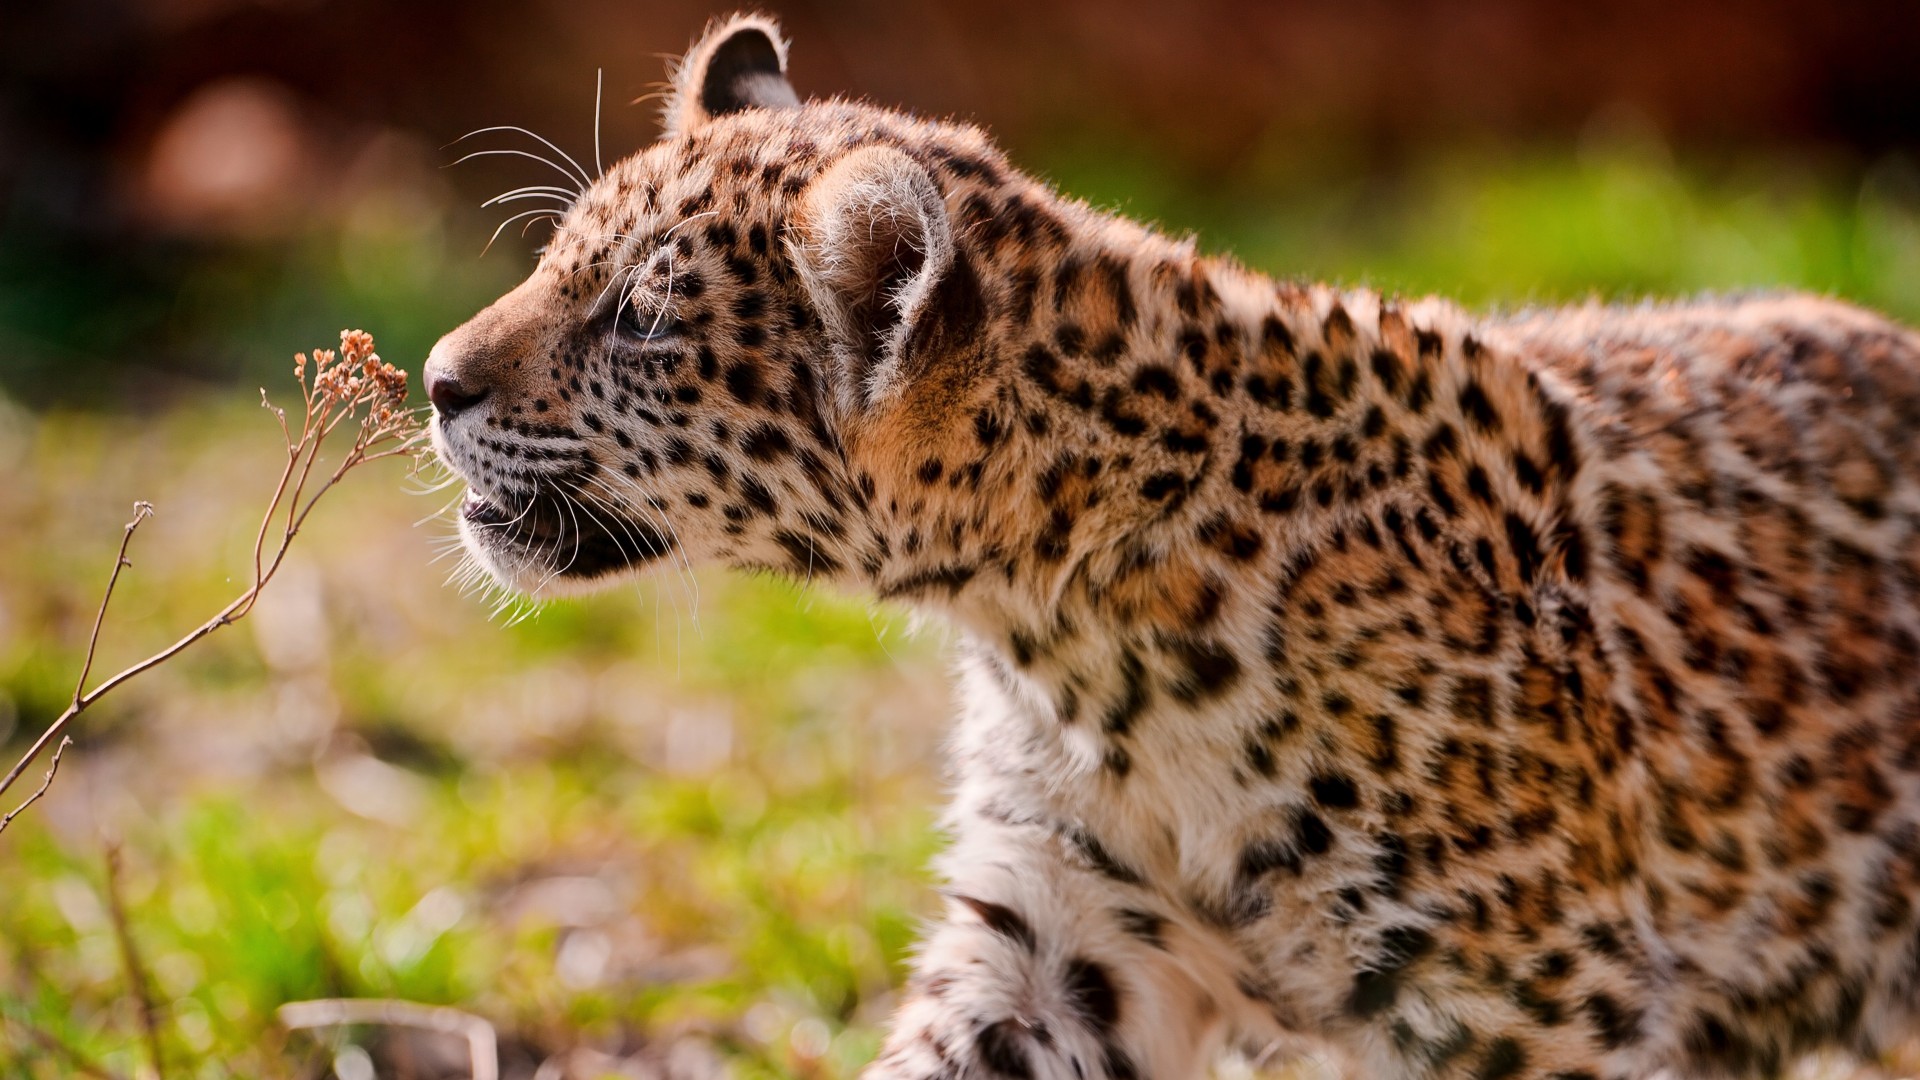 Leopard, cub, eyes, grass, walk (horizontal)